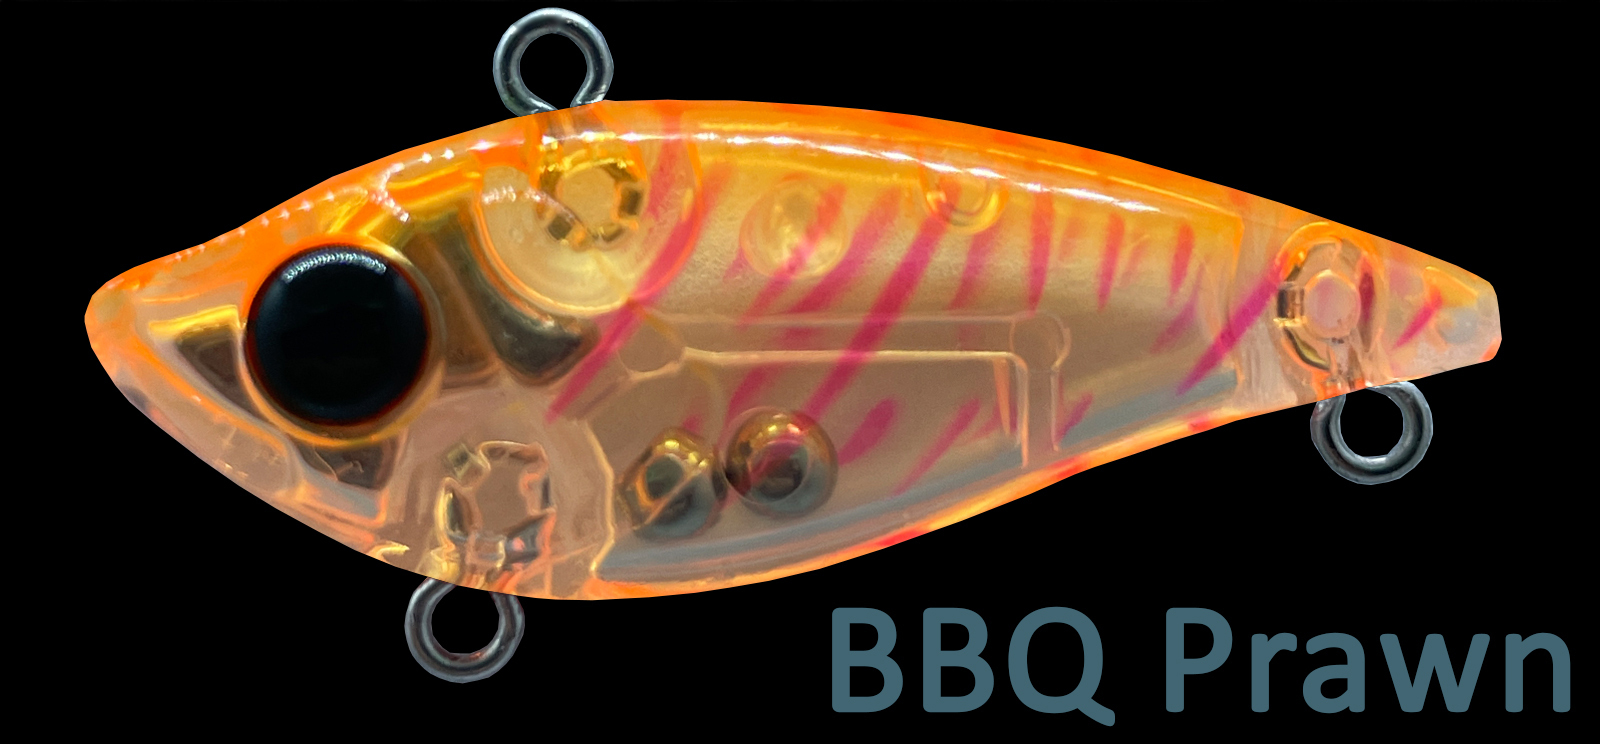 Cranka 40mm 4.5g Lipless Sinking VIB Fishing Lure - Choose Colour